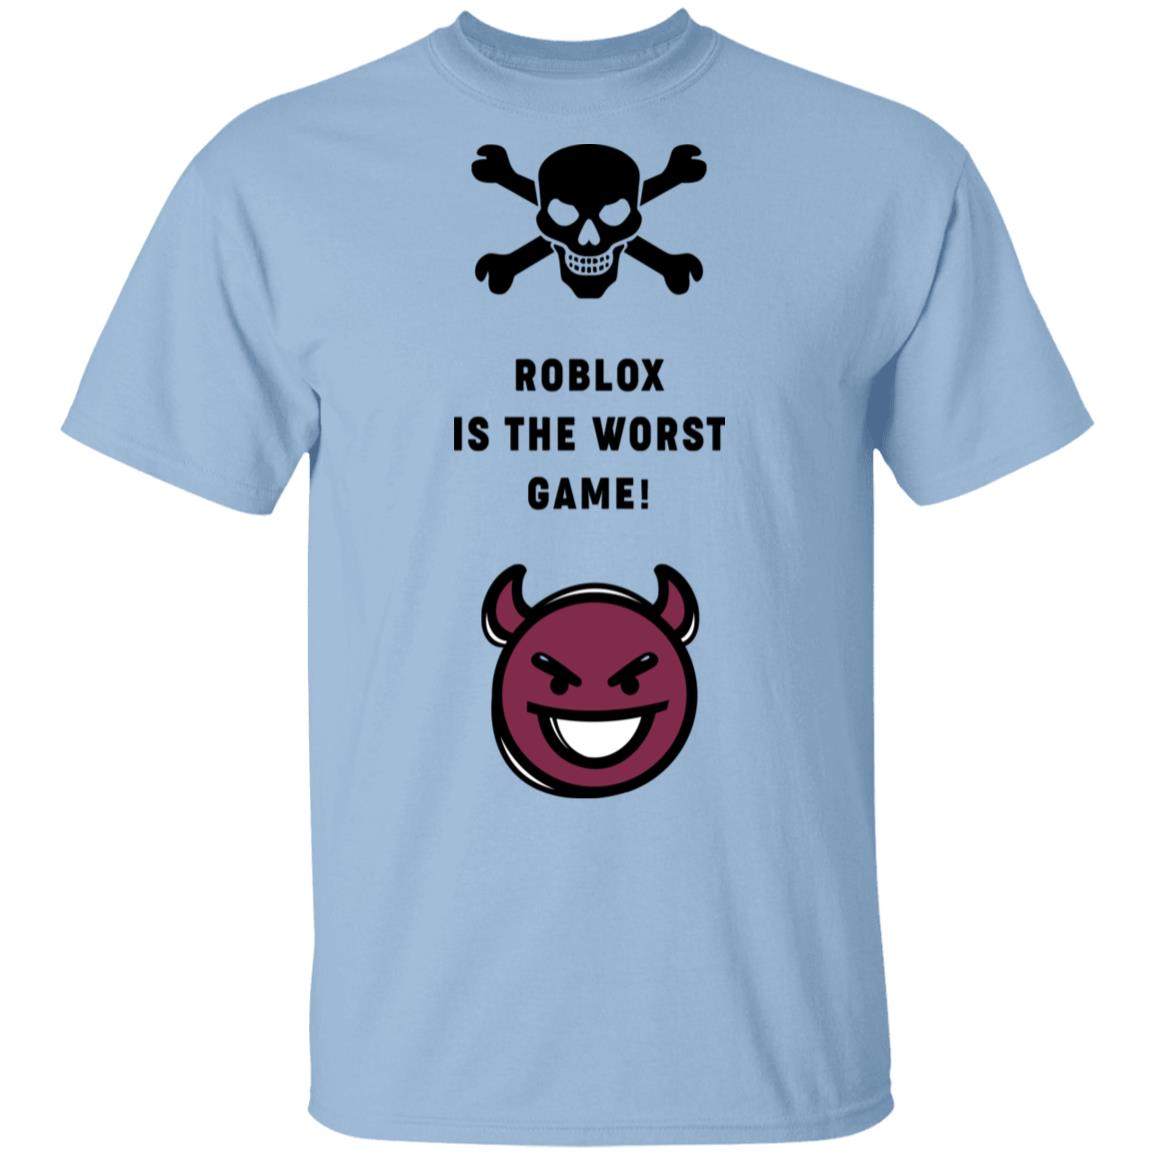 Kids Boys Girls Roblox 2021 T-Shirt Short Sleeve Childrens Gaming